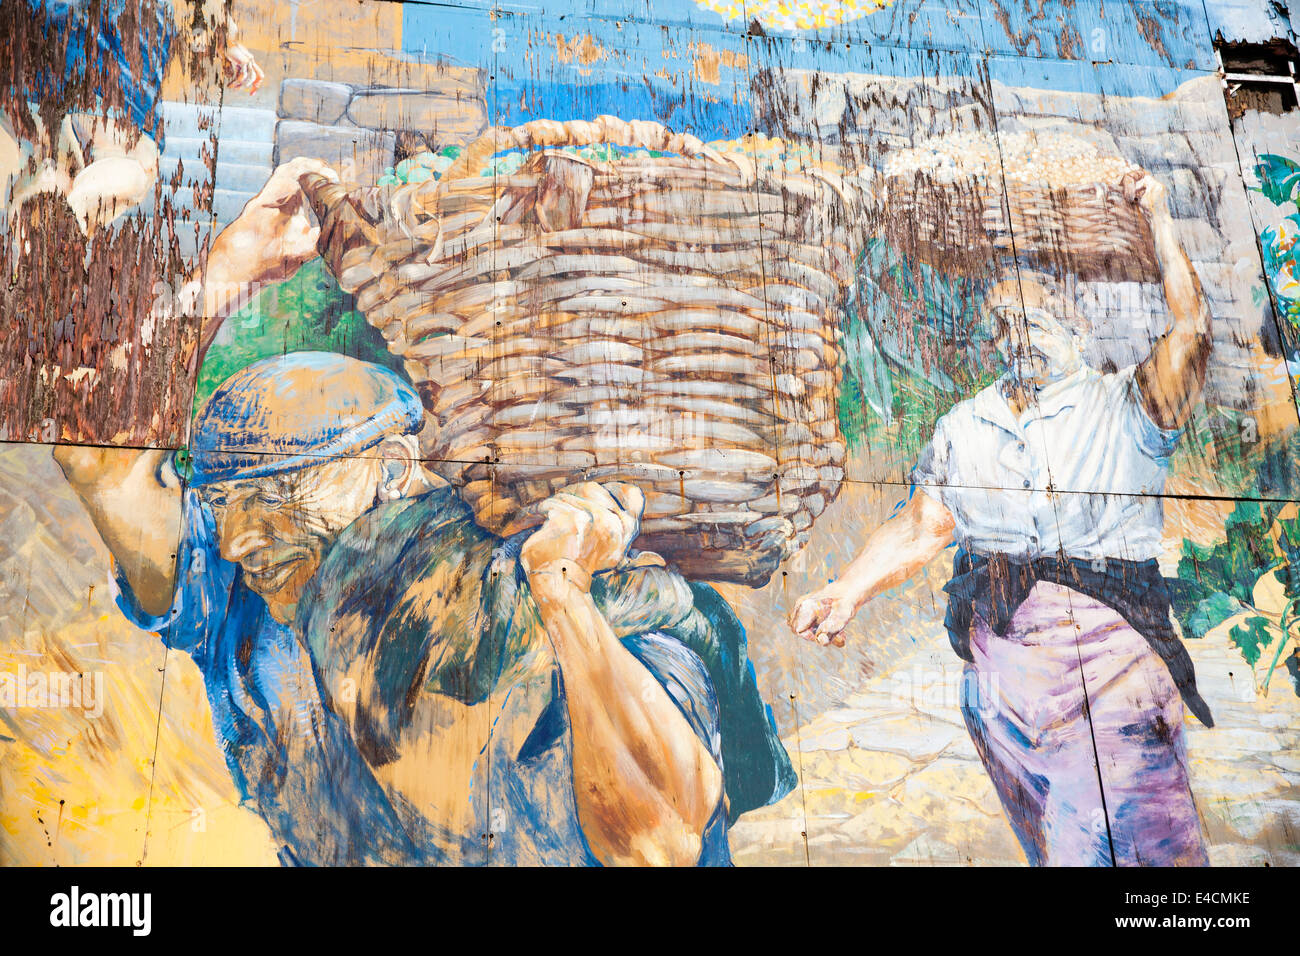 Mural in Riomaggiore showing traditional grape harvesters. Stock Photo